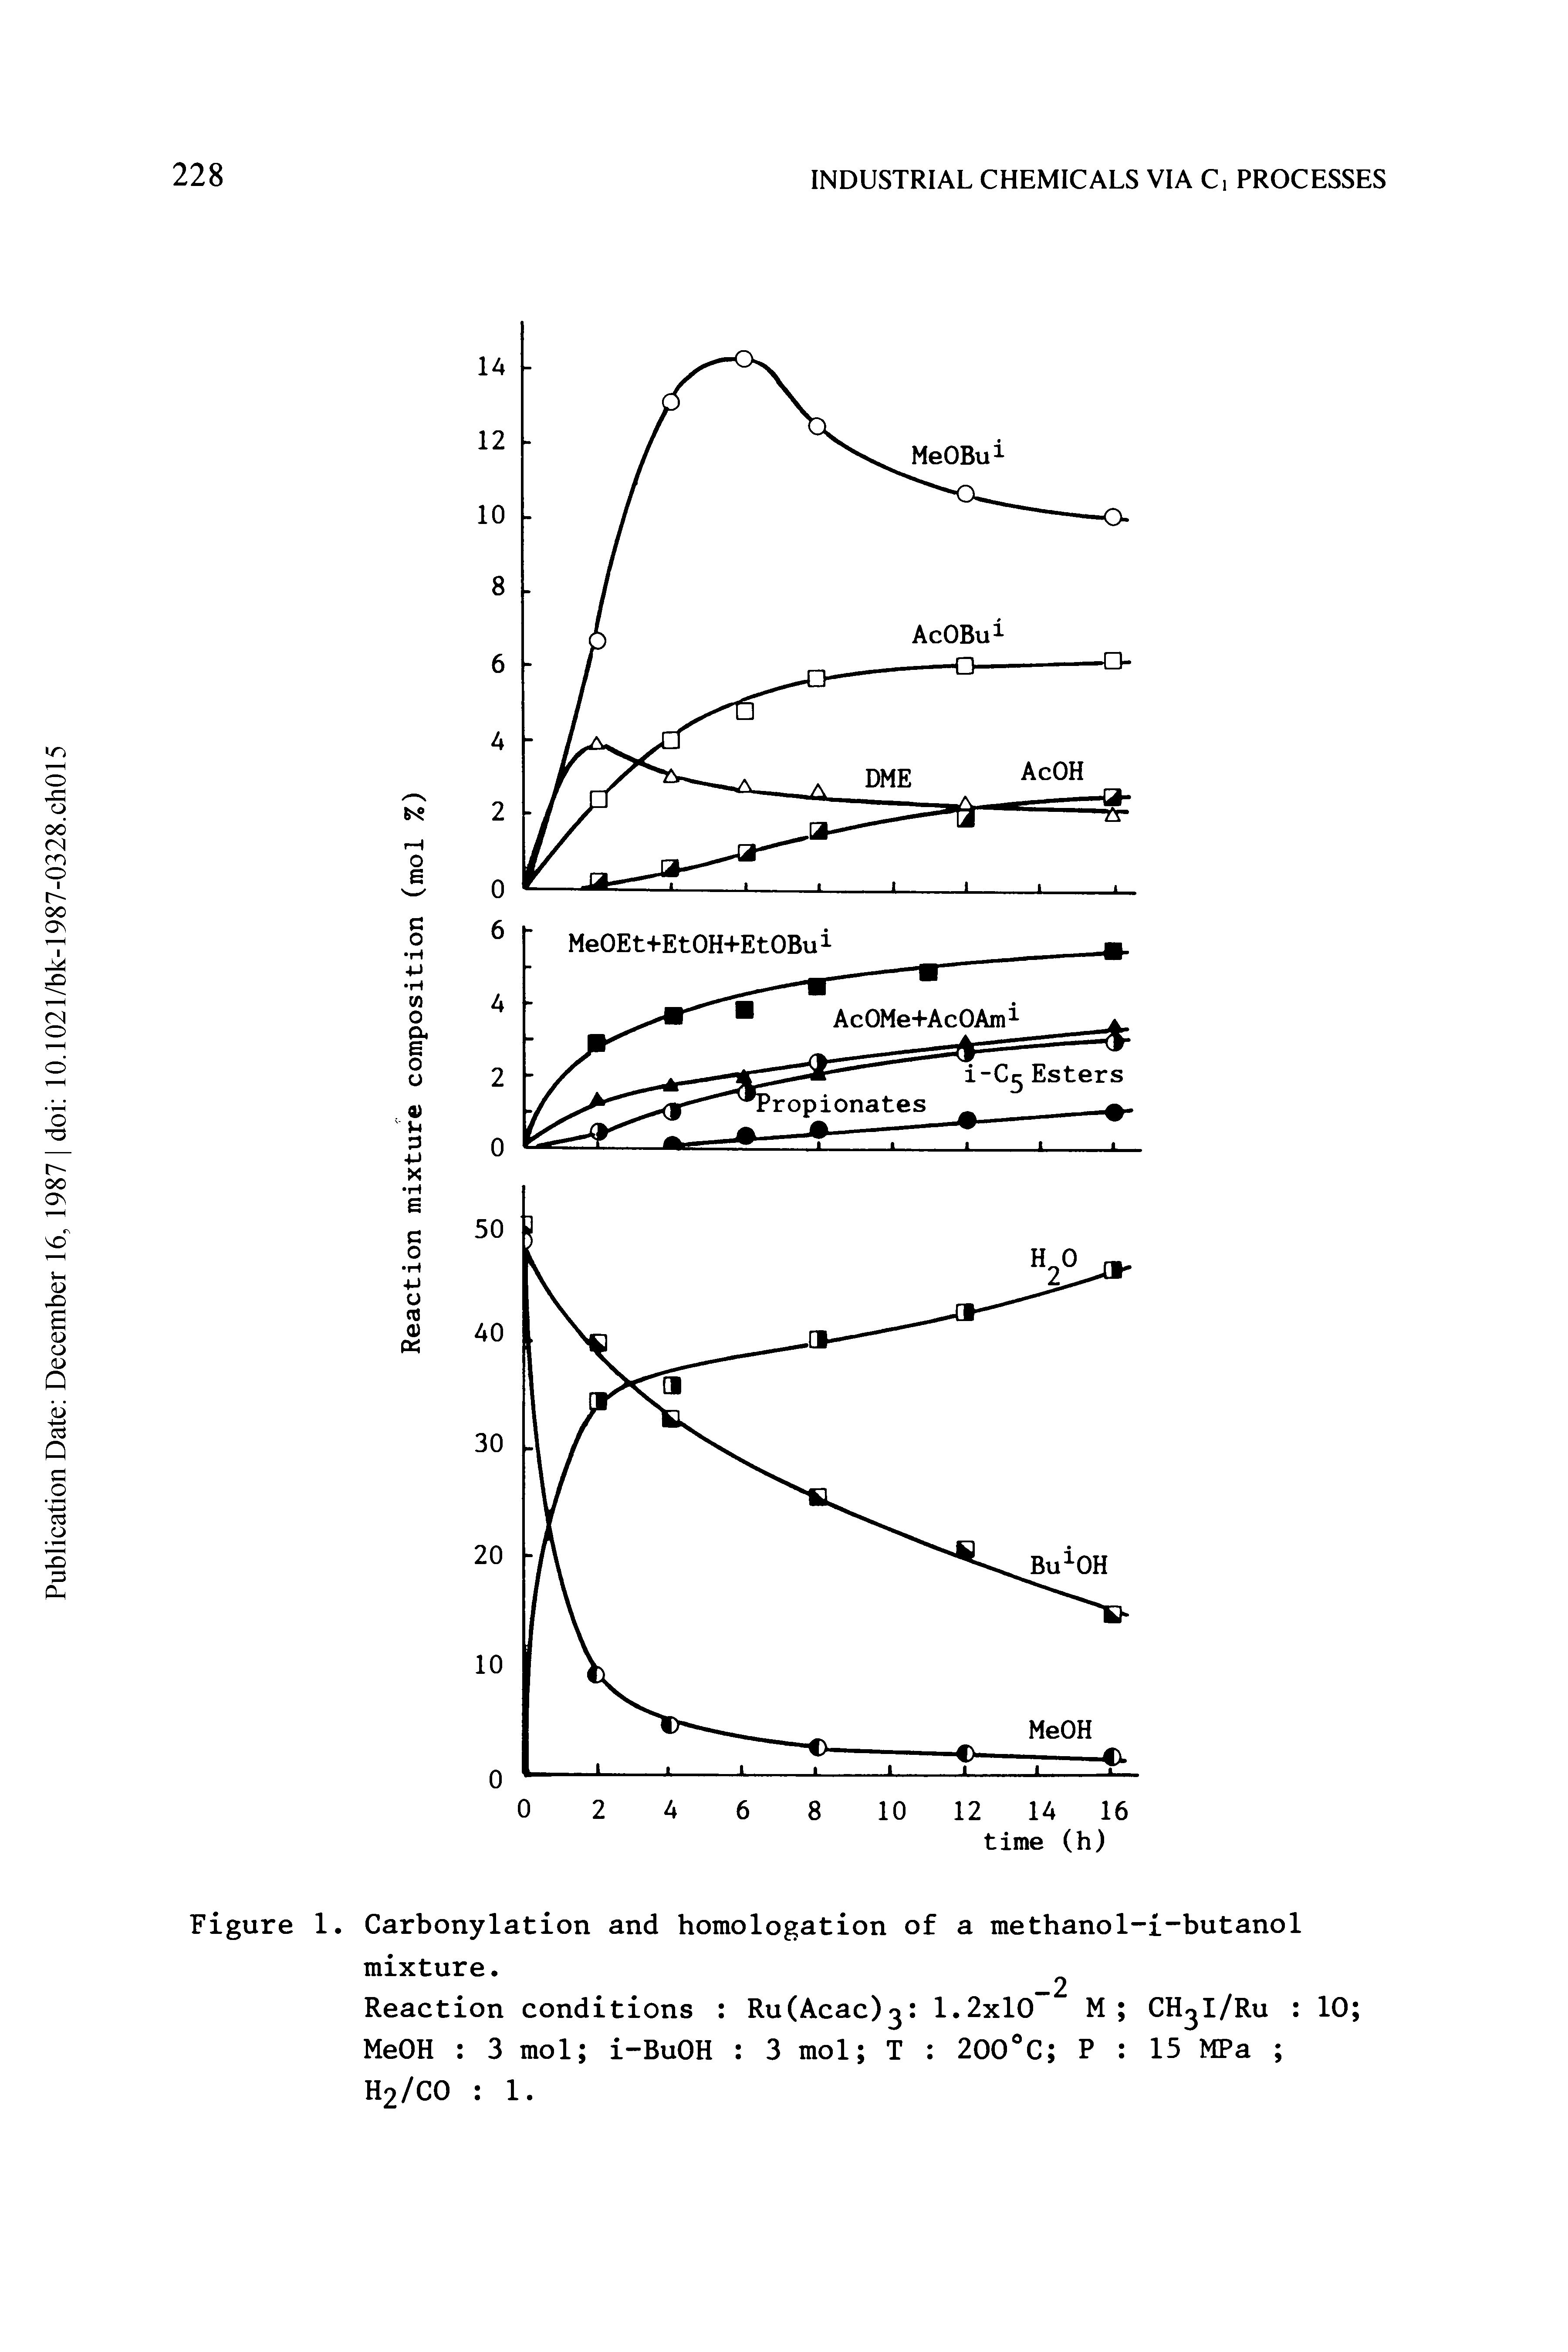 Figure 1. Carbonylation and homologation of a methanol-i-butanol mixture.